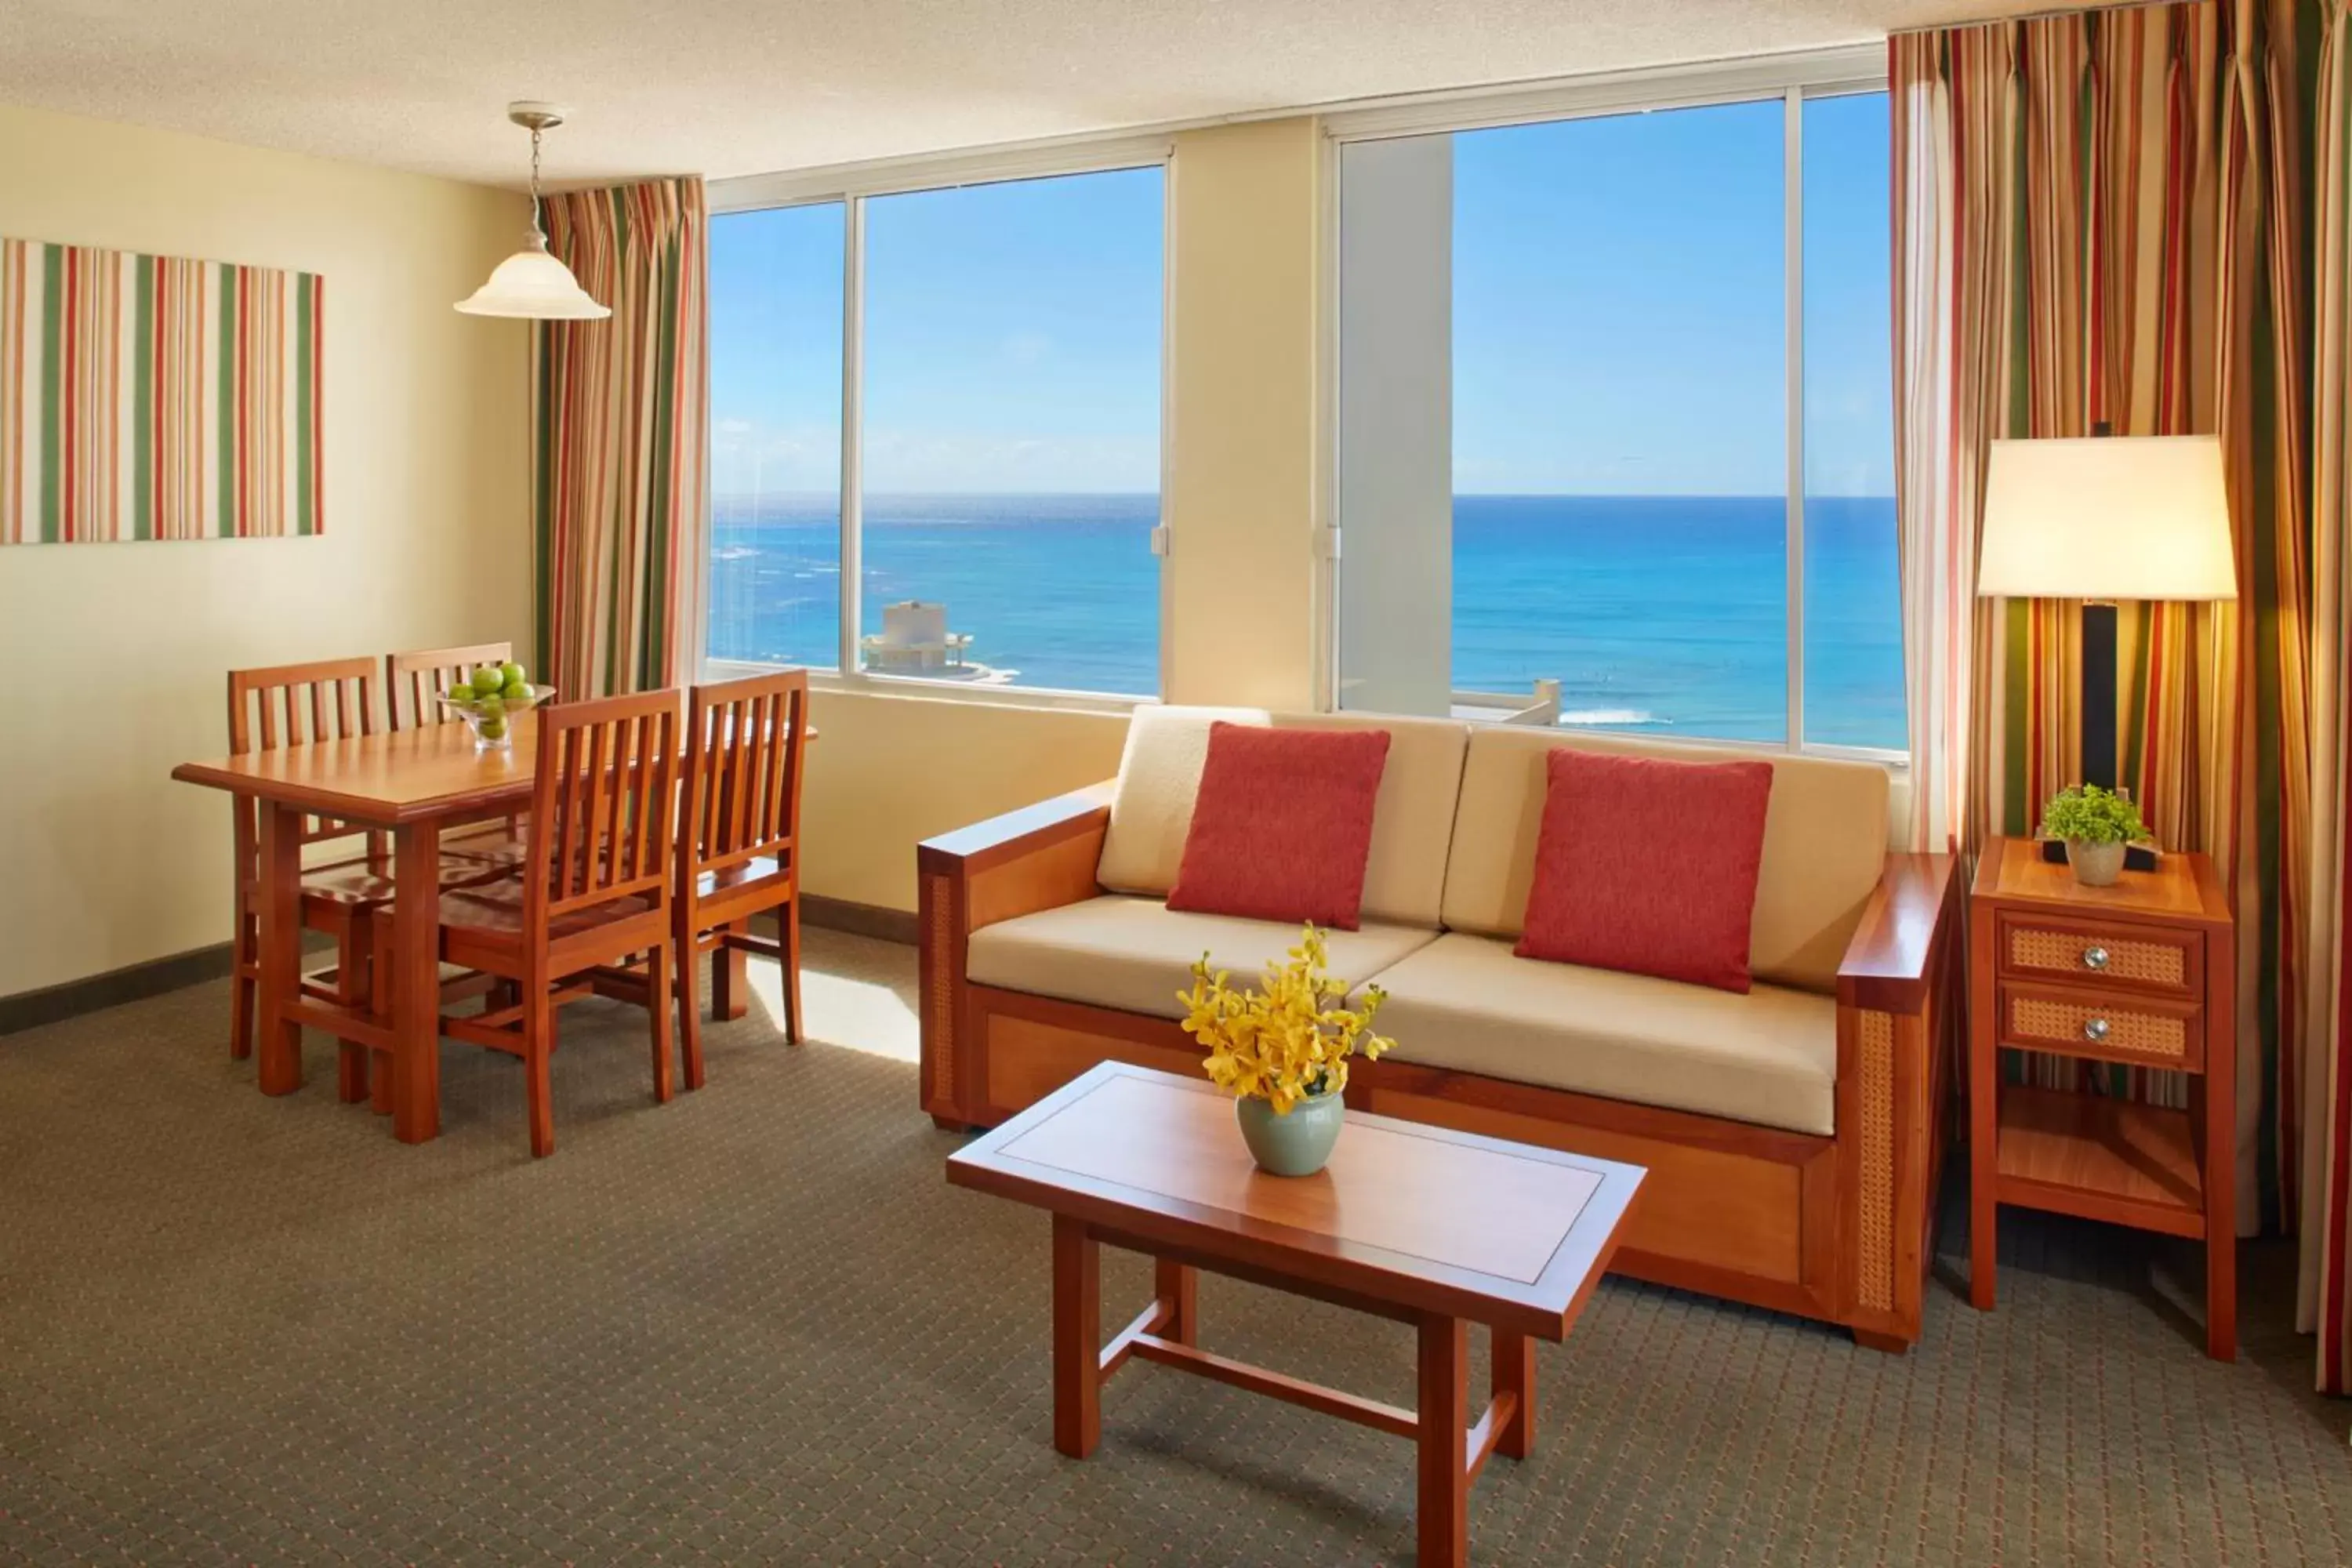 Ocean View One Bedroom Suite with One Queen Bed in Pacific Monarch